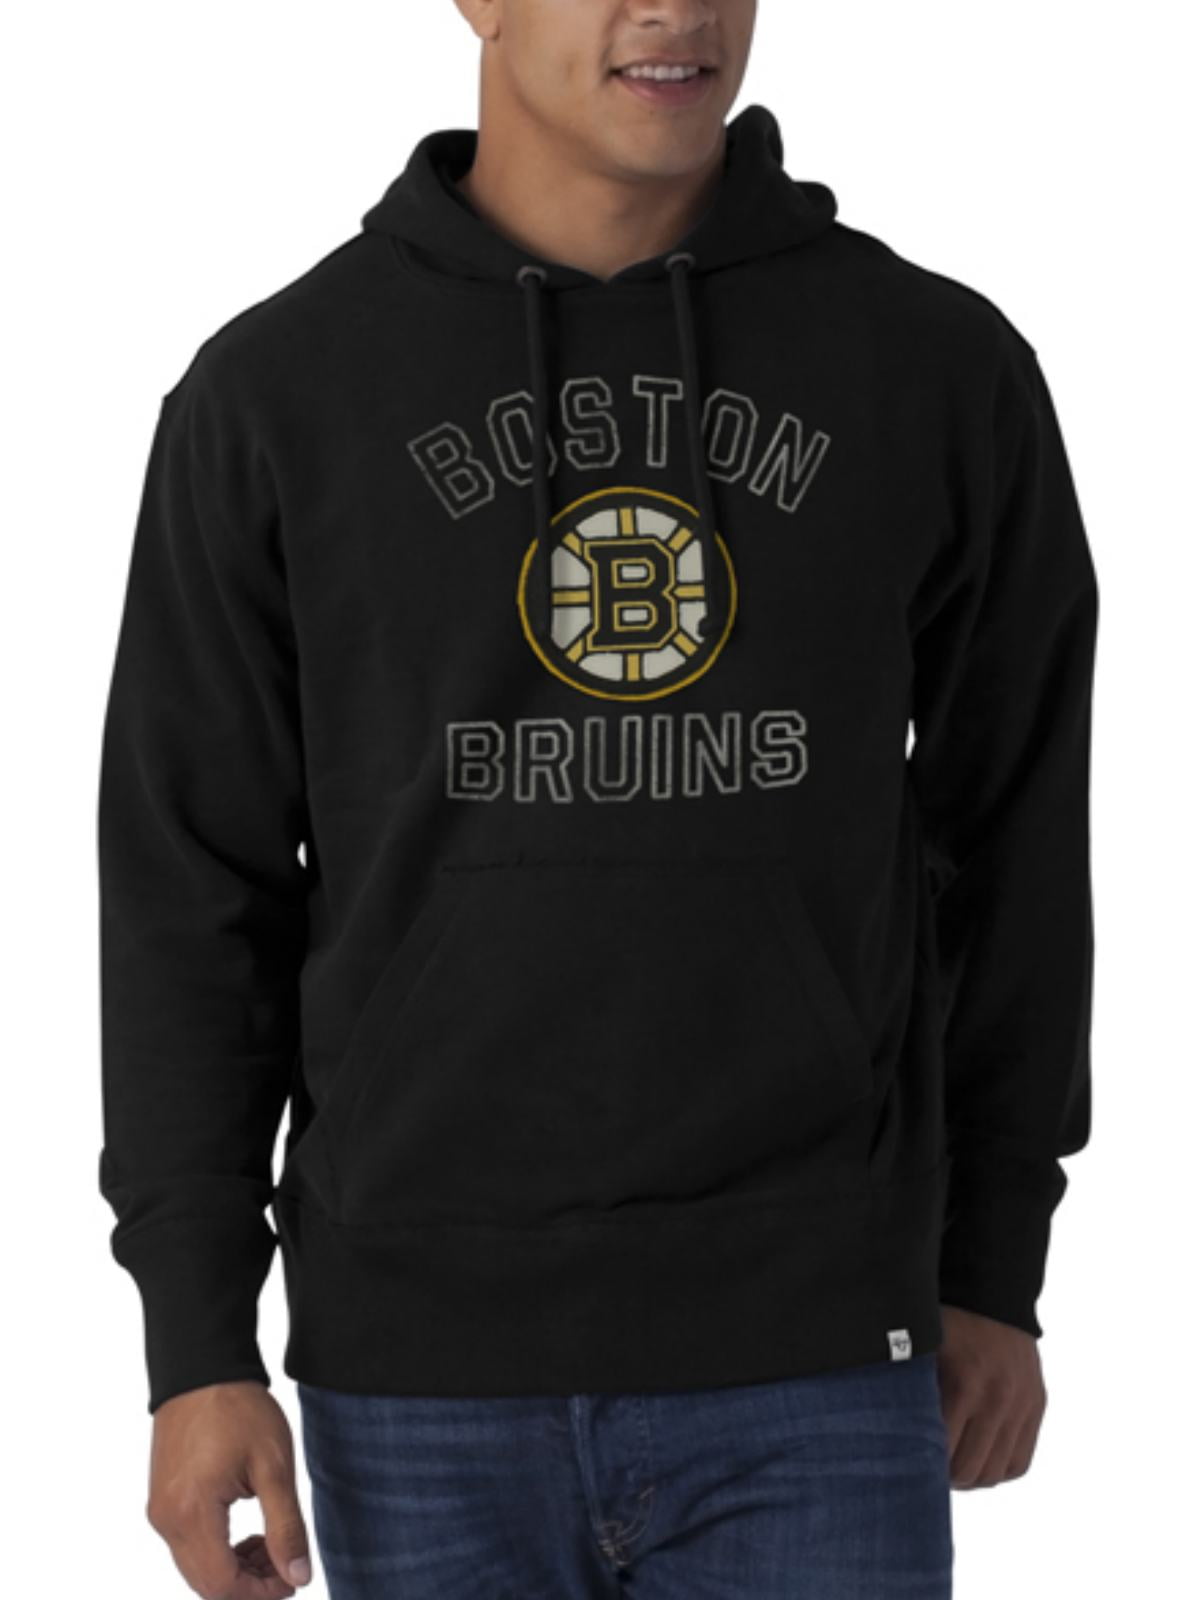 boston bruins embroidered sweatshirt